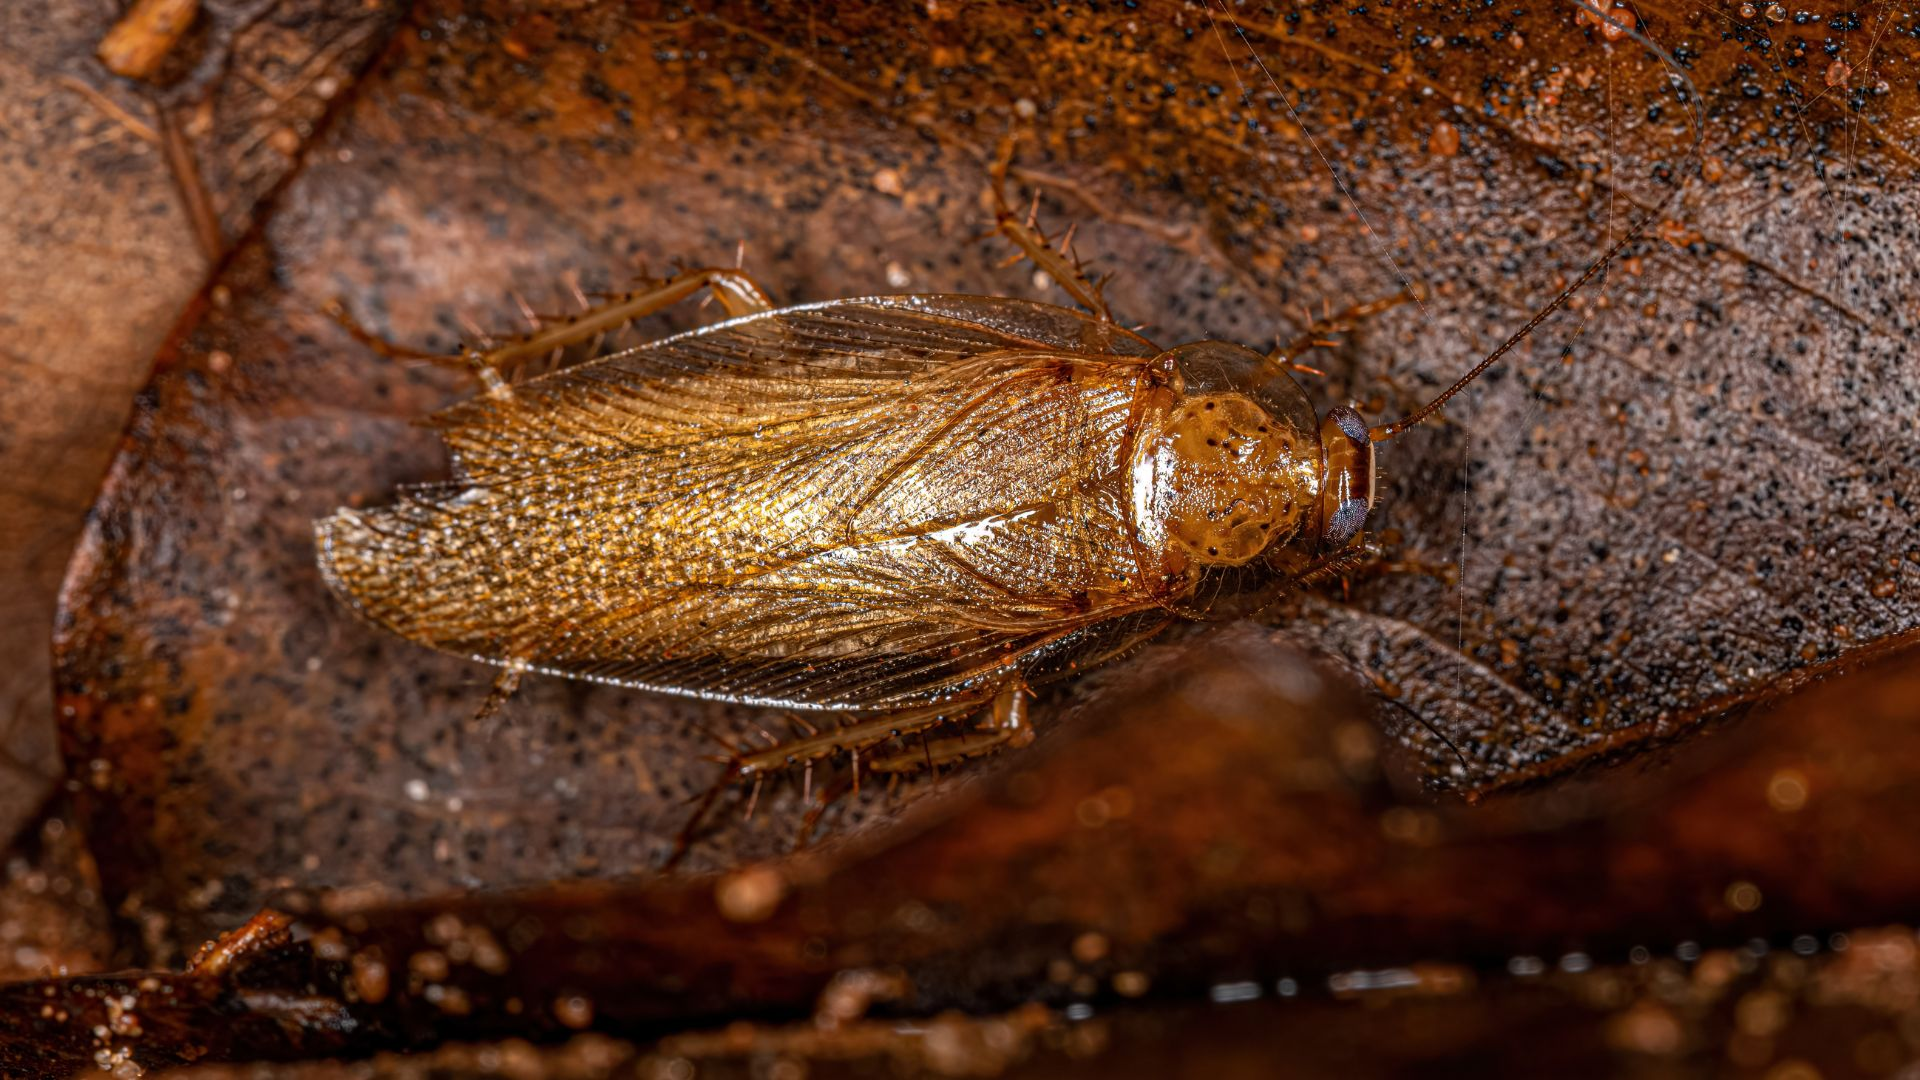 A photo of a Pennsylvania wood cockroach feeding on a decaying leaf.